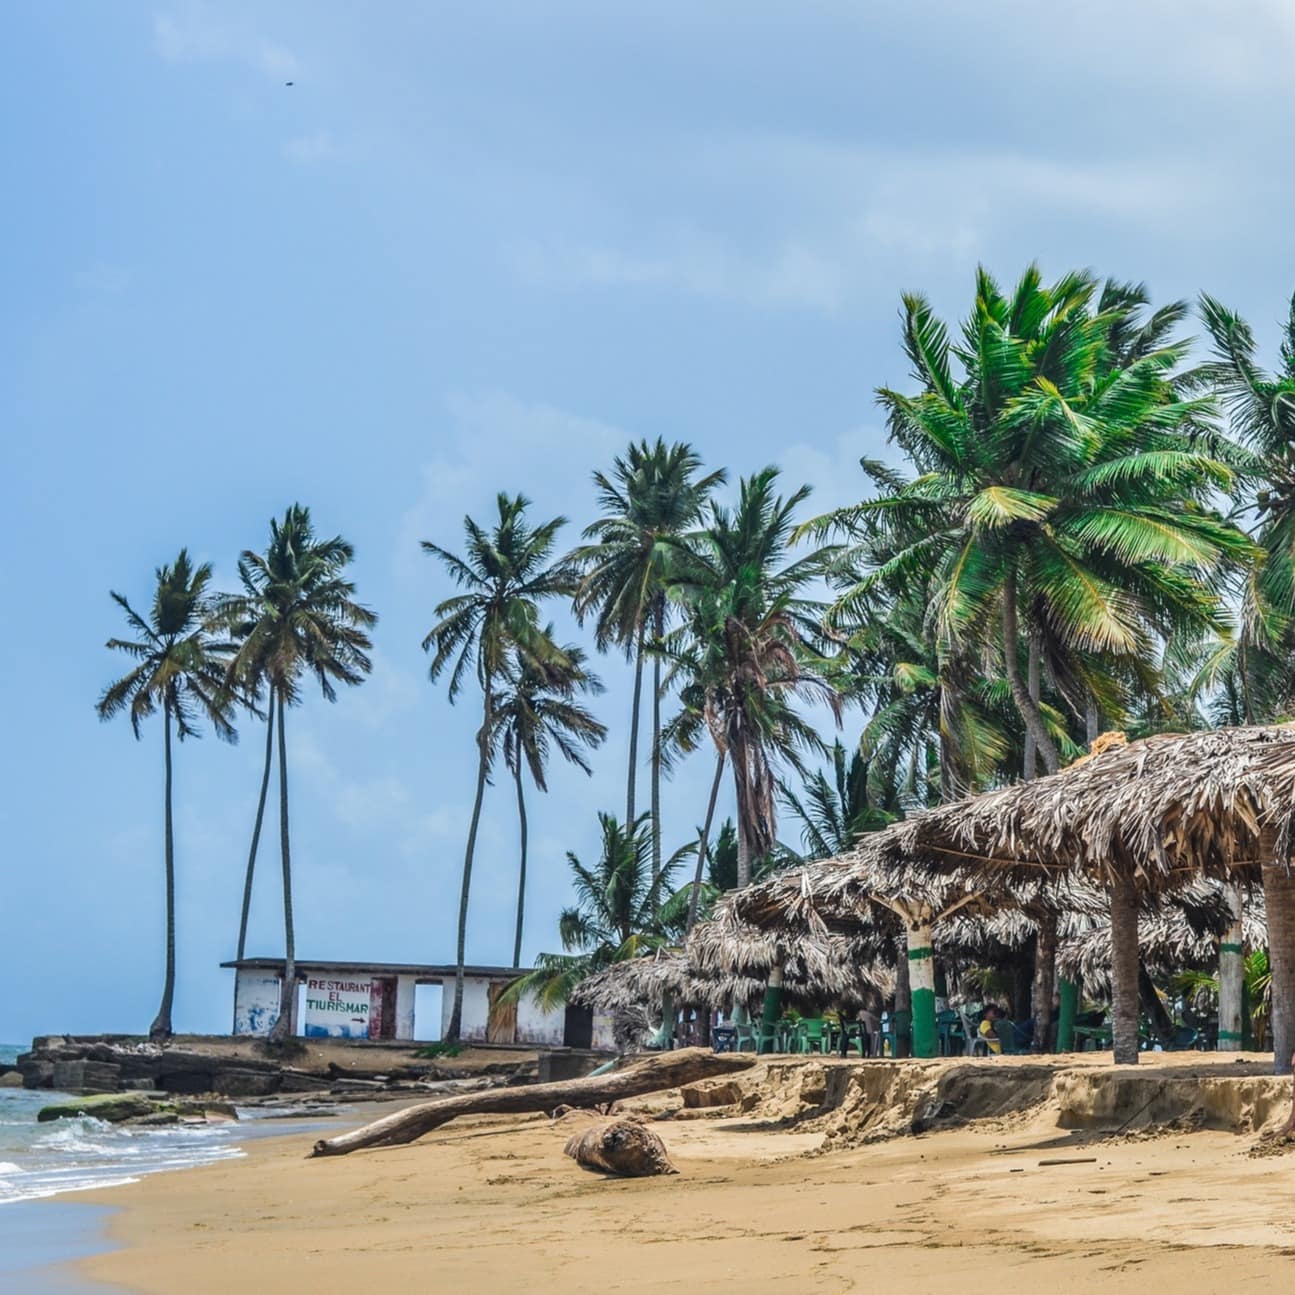 A beach umbrella made of palm fronds